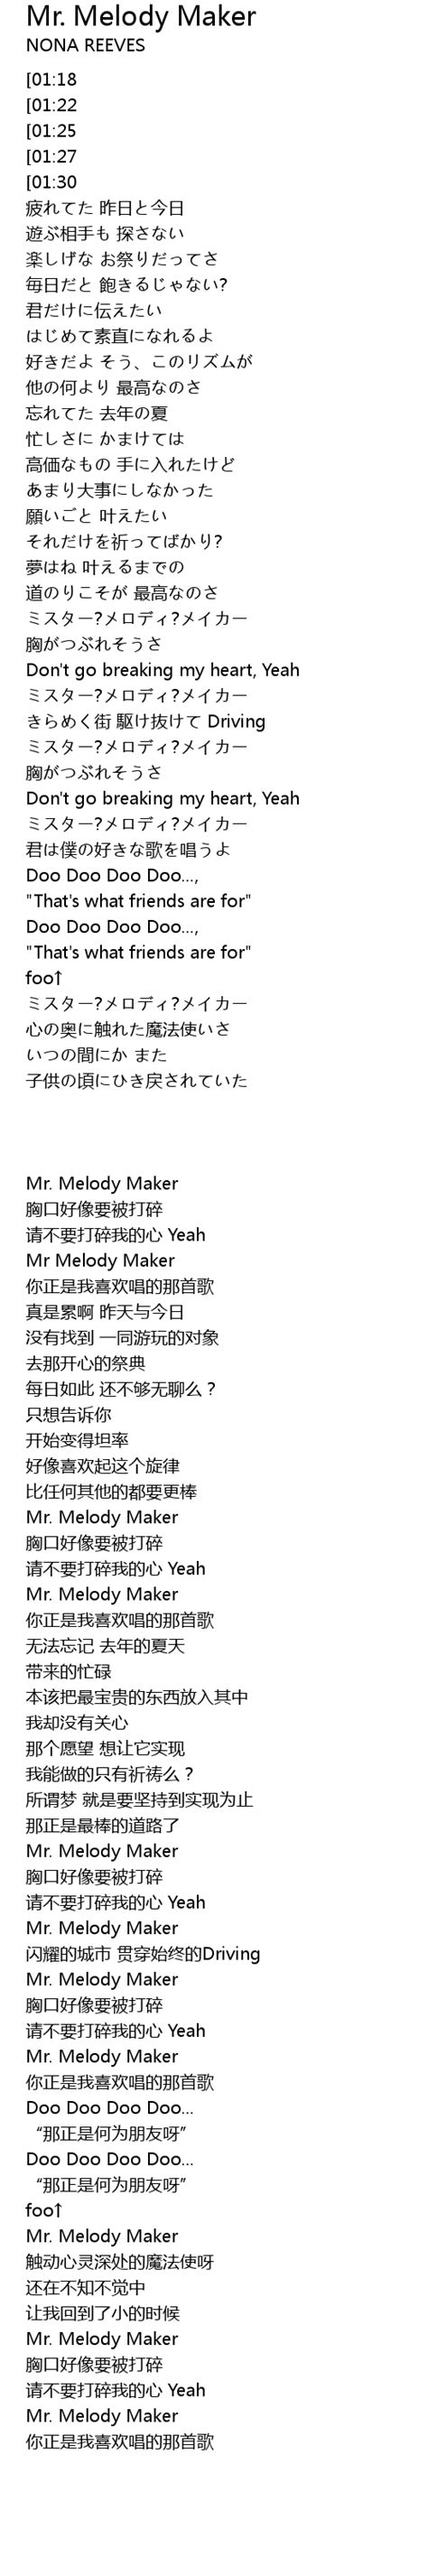 melody maker for lyrics